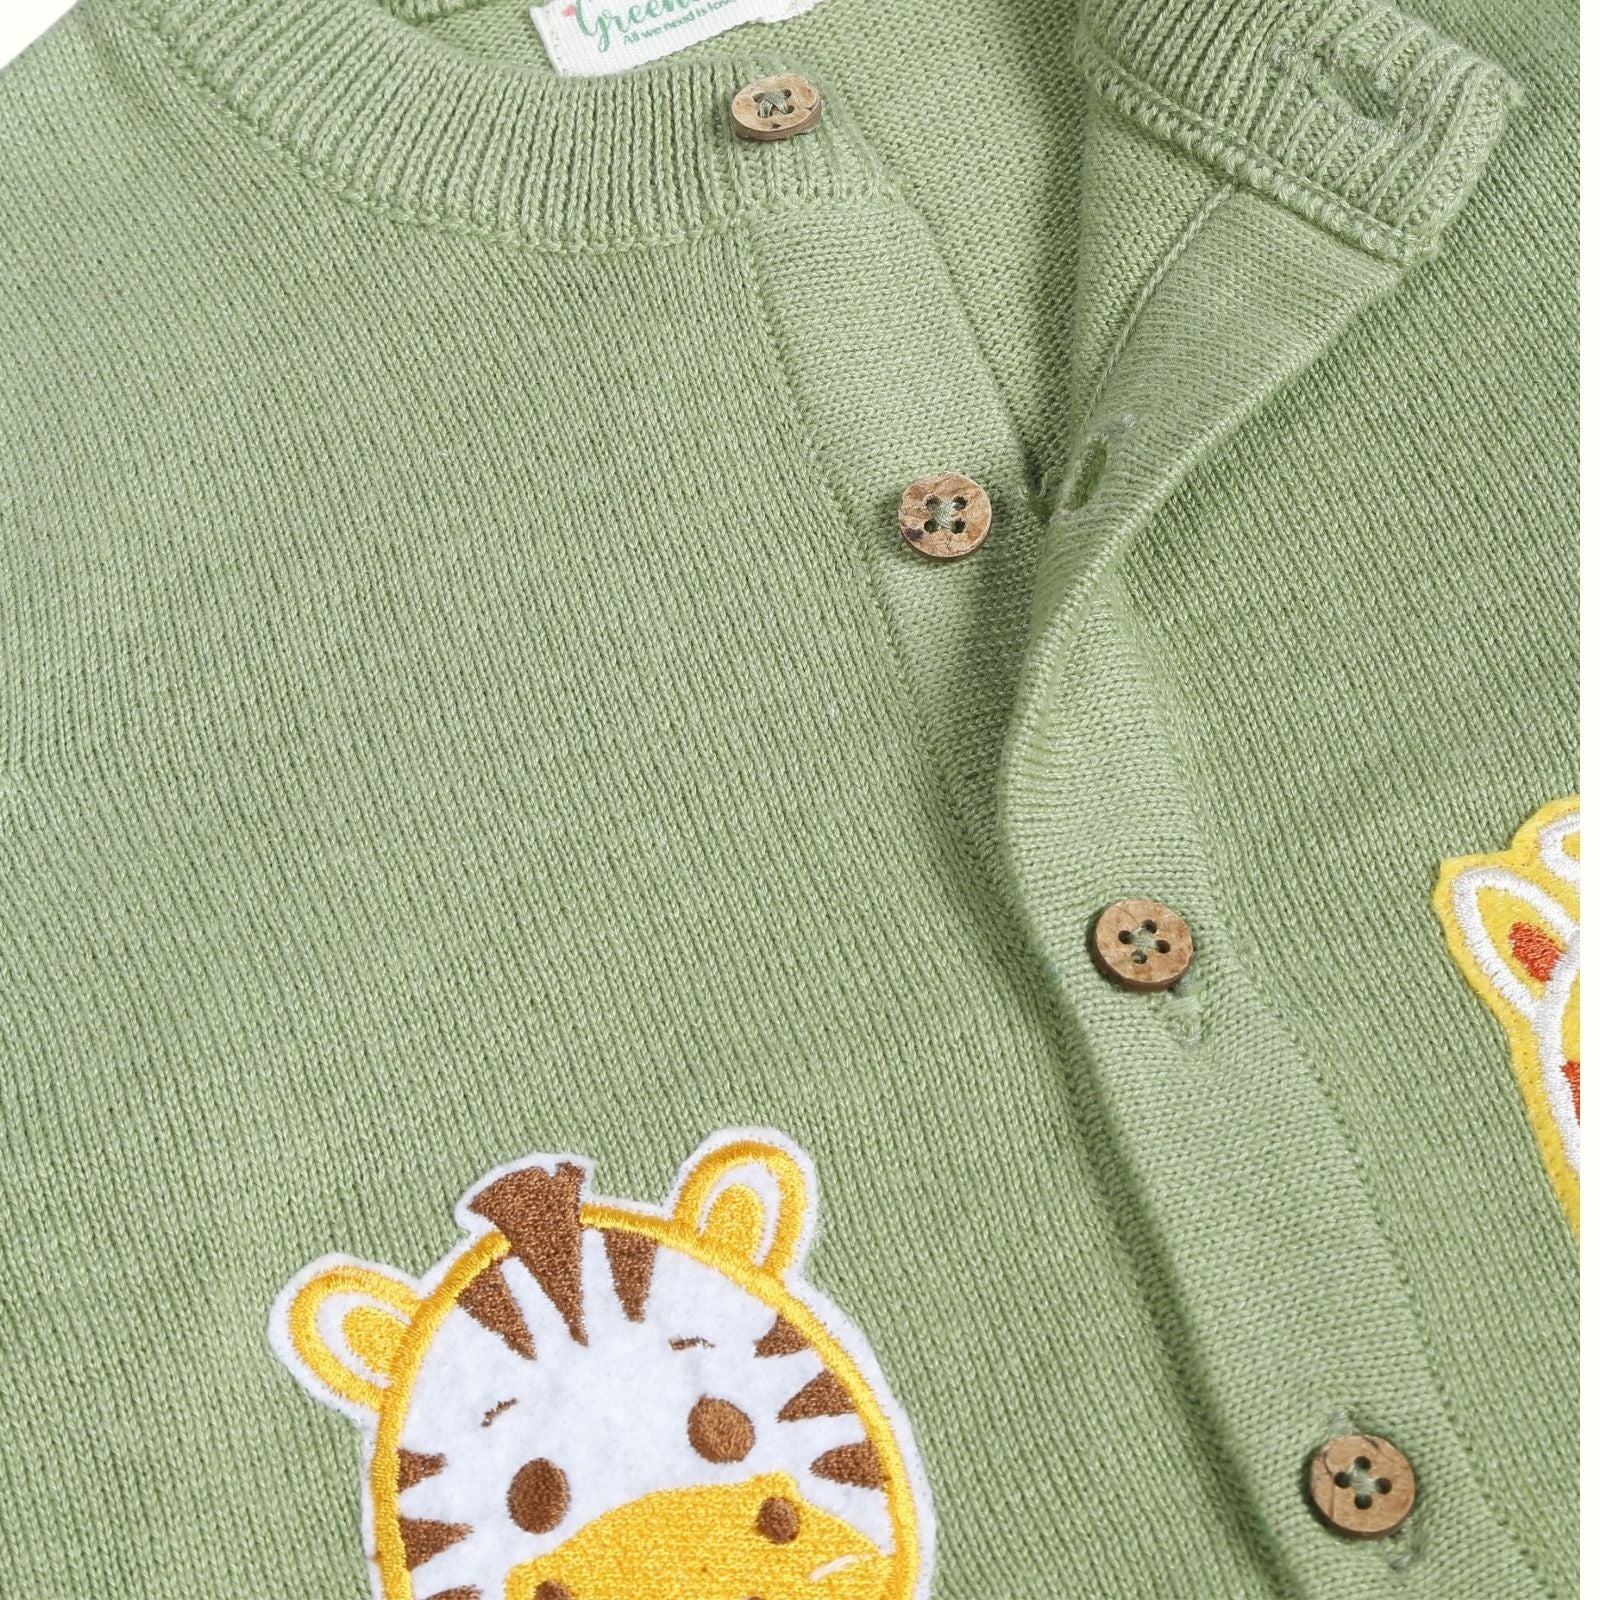 Greendeer Cheerful Dog & Happy Baby Animal 100 % Cotton Sweater Set of 2